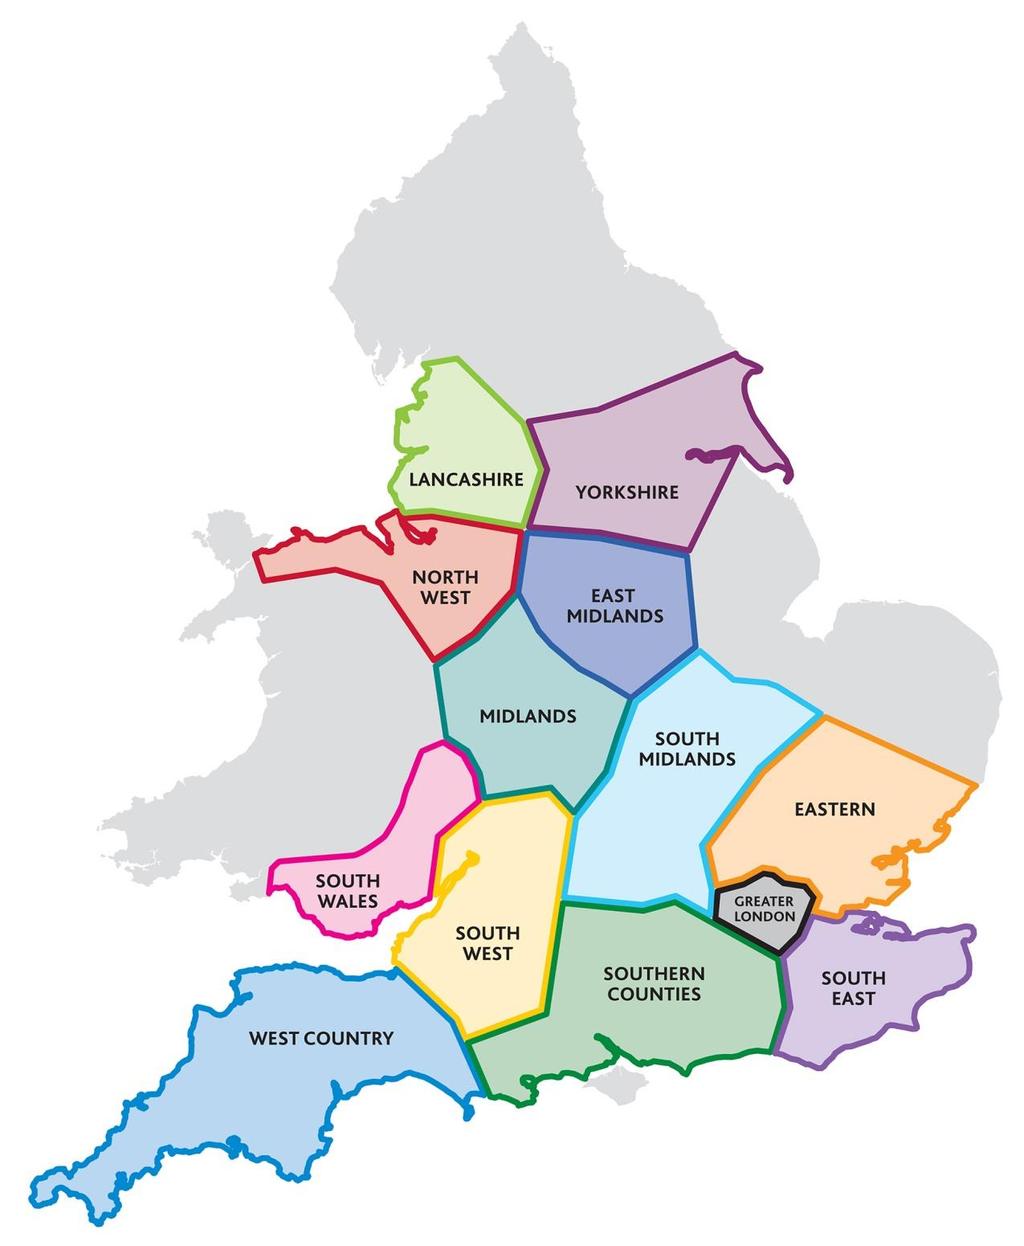 Divisional structure Homes Divisions Yorkshire Lancashire North West Midlands East Midlands South Midlands